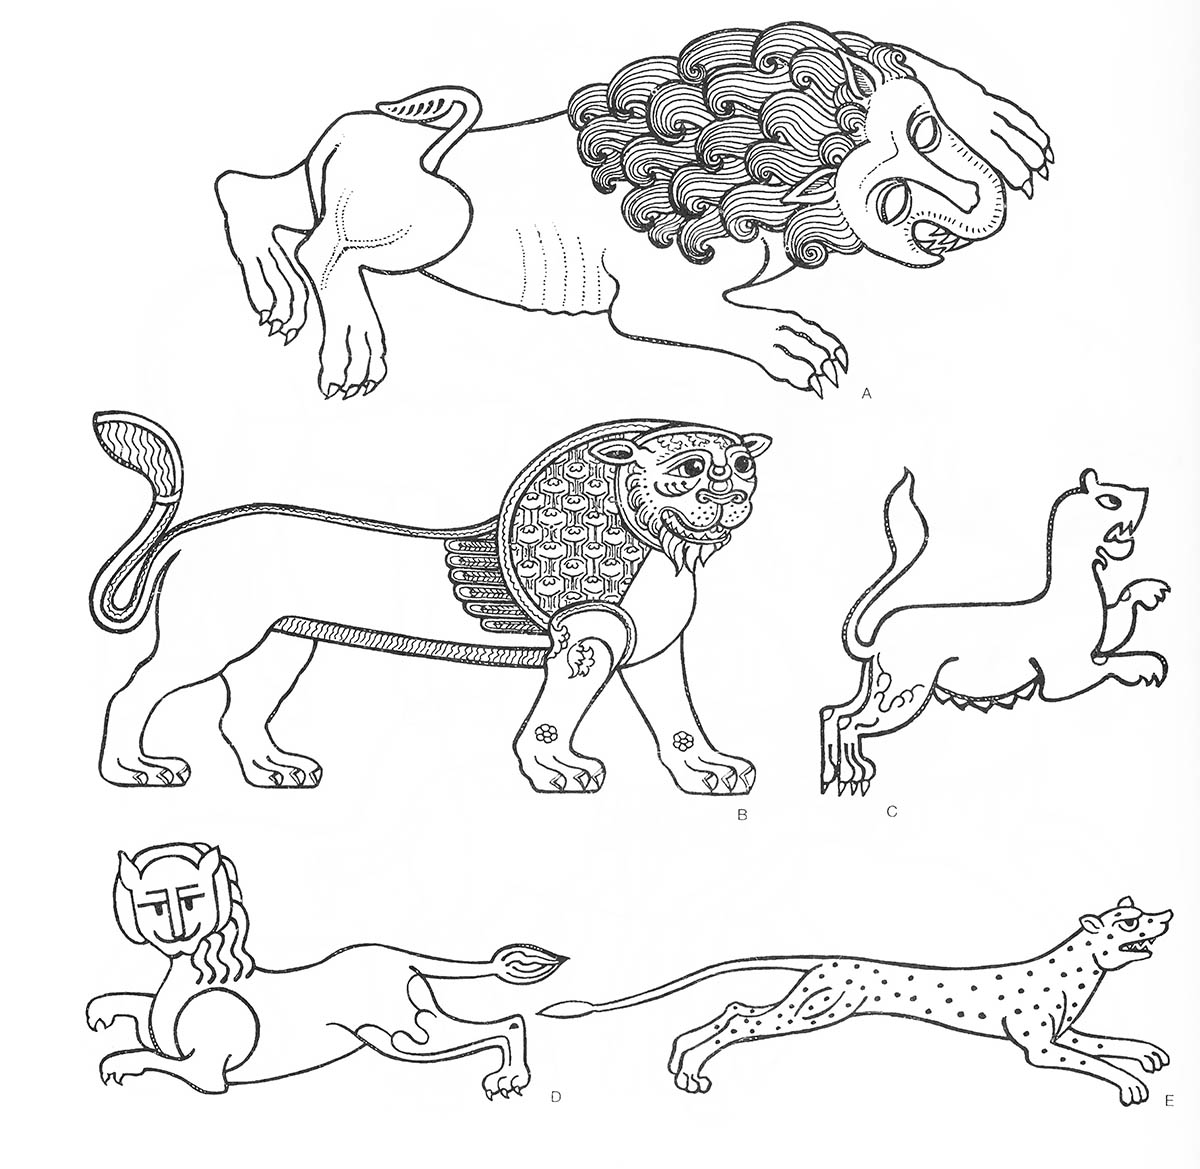 ad — лев (самец, атакующий), b — лев (самец), c — лев (львица, атакующая), е — леопард (бегущий) / Византия